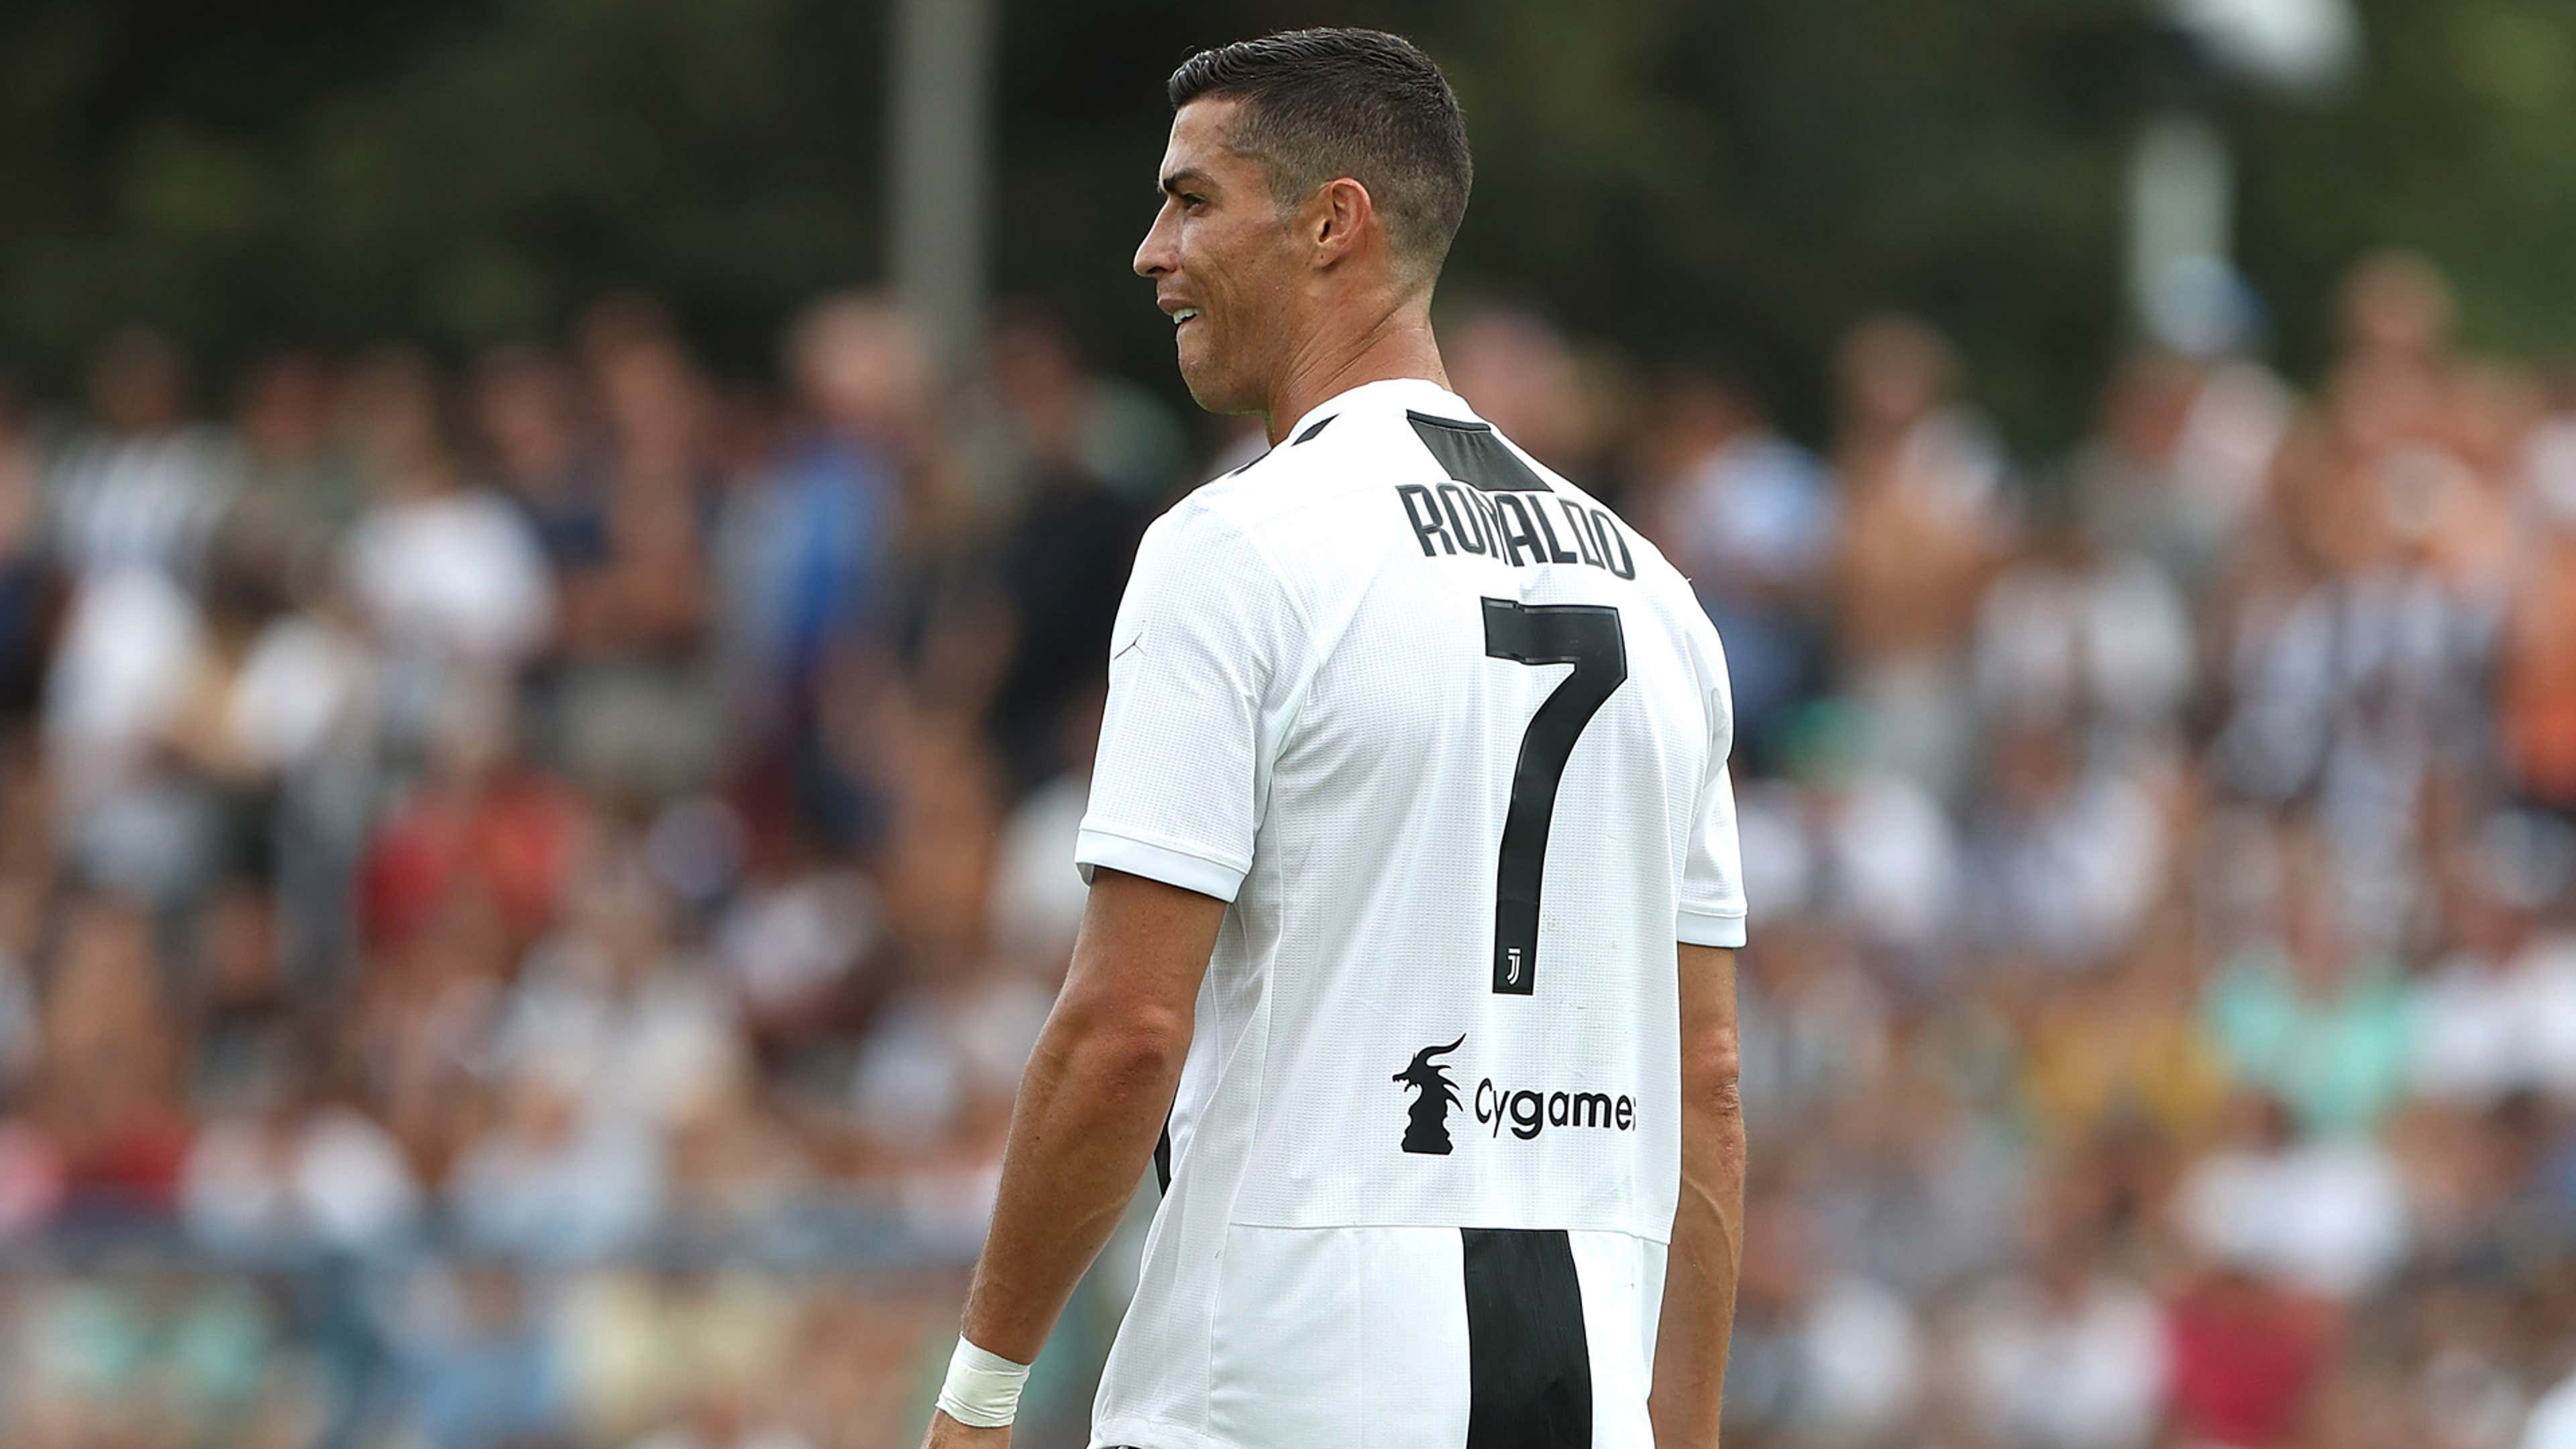 Cristiano Ronaldo ya marca con la camiseta de la Juventus